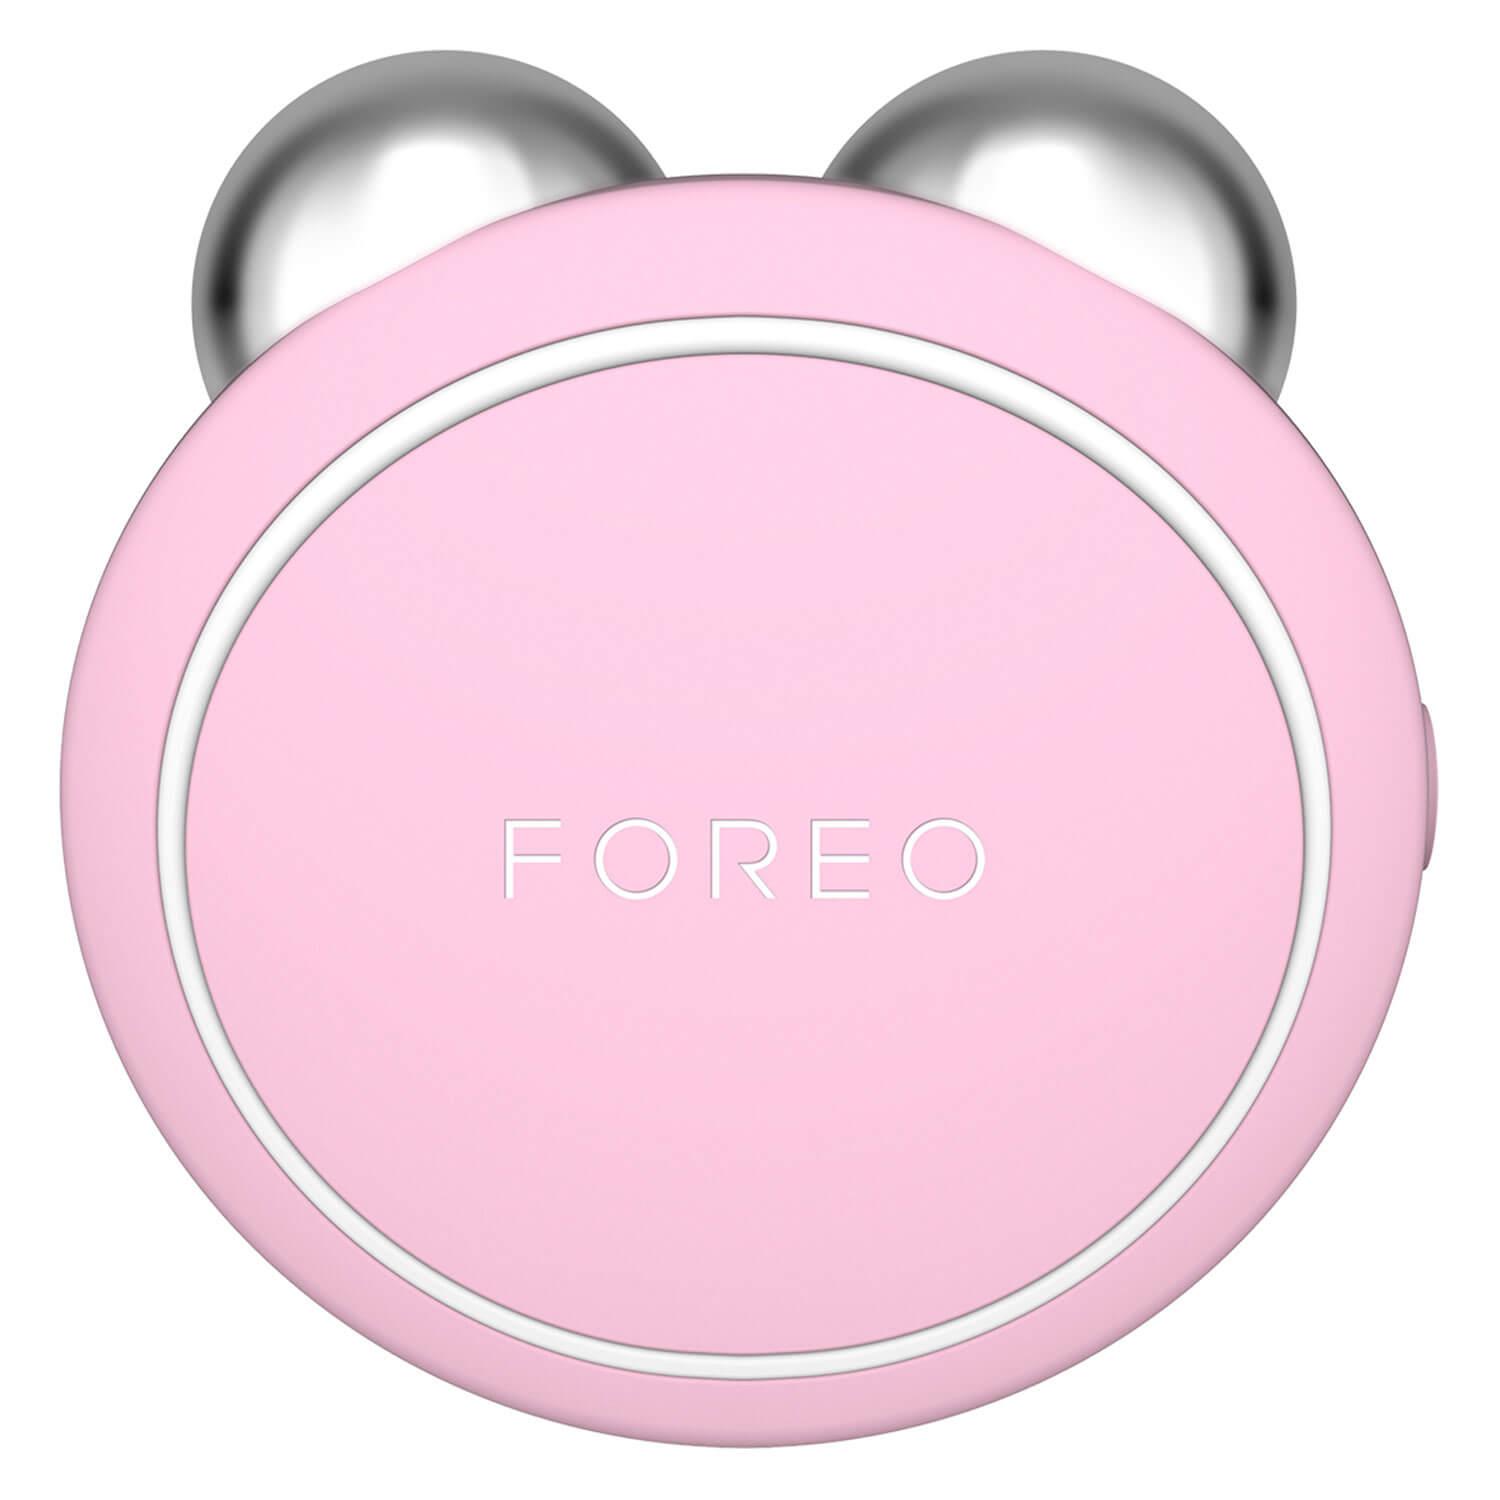 BEAR™ mini - Facial Toning Device Pearl Pink